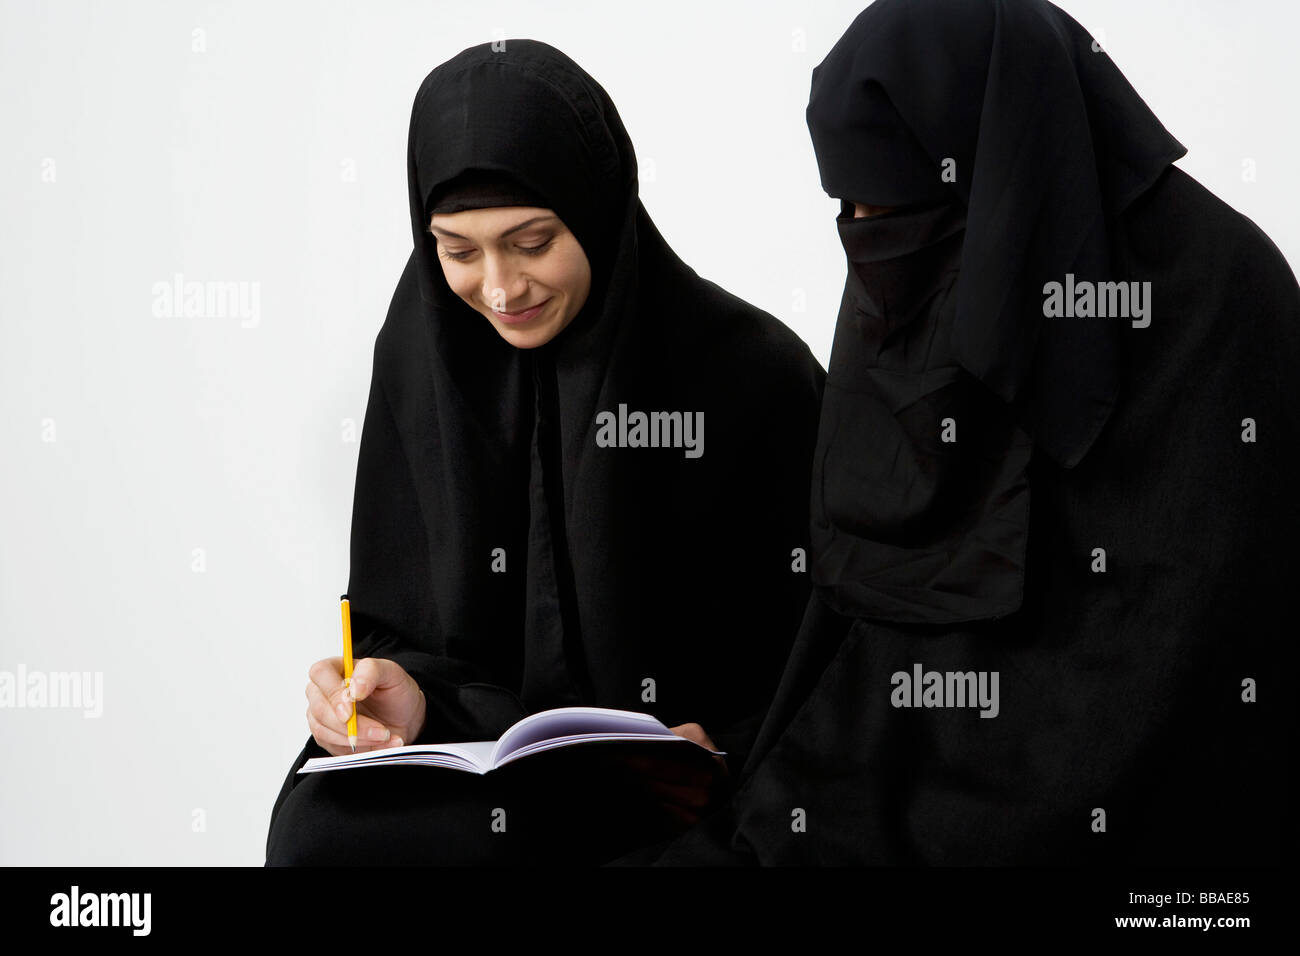 Two women wearing traditional Muslim clothing Stock Photo